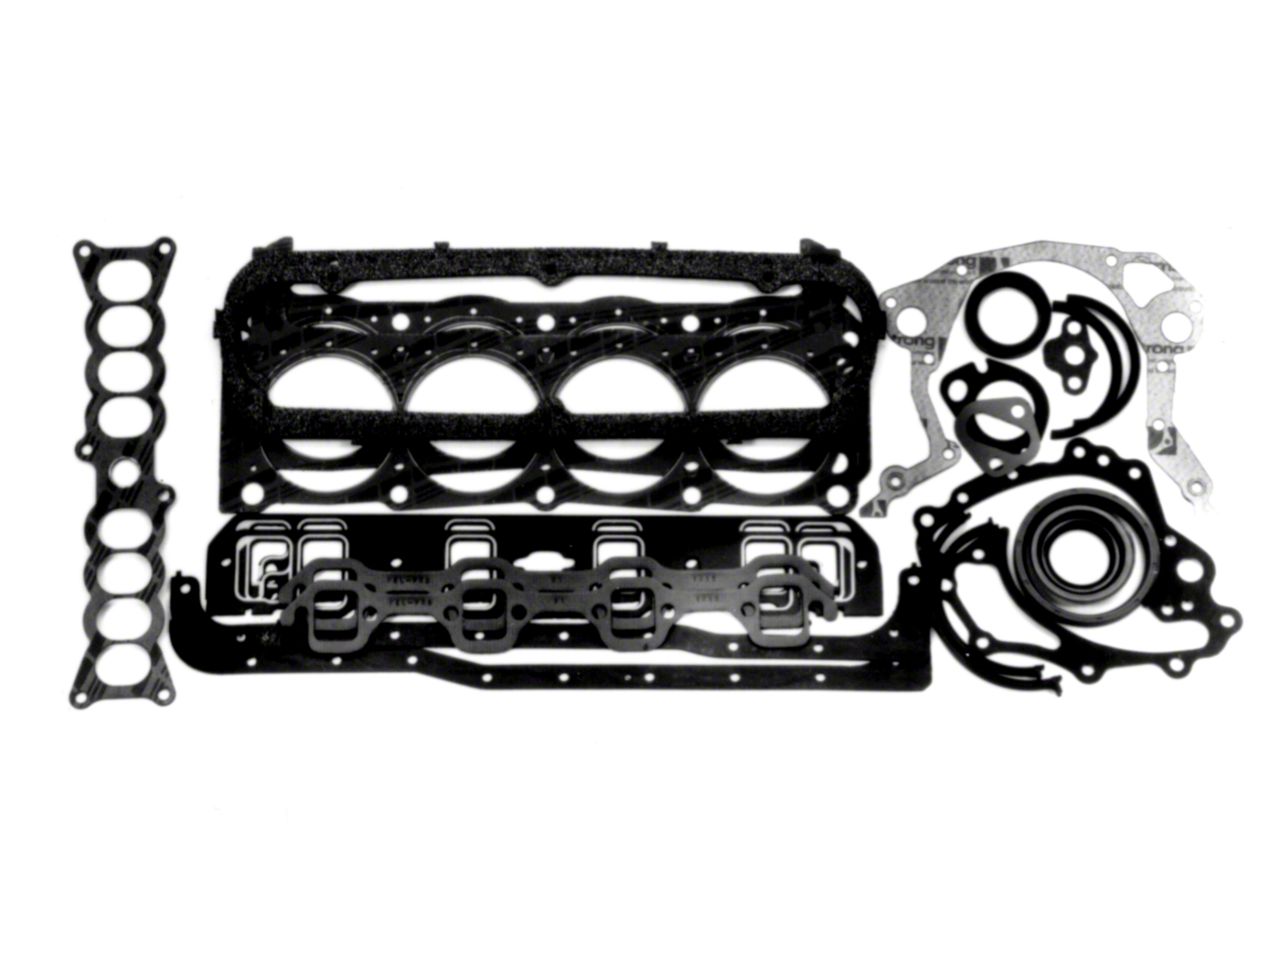 Ford racing complete engine gasket kit #9